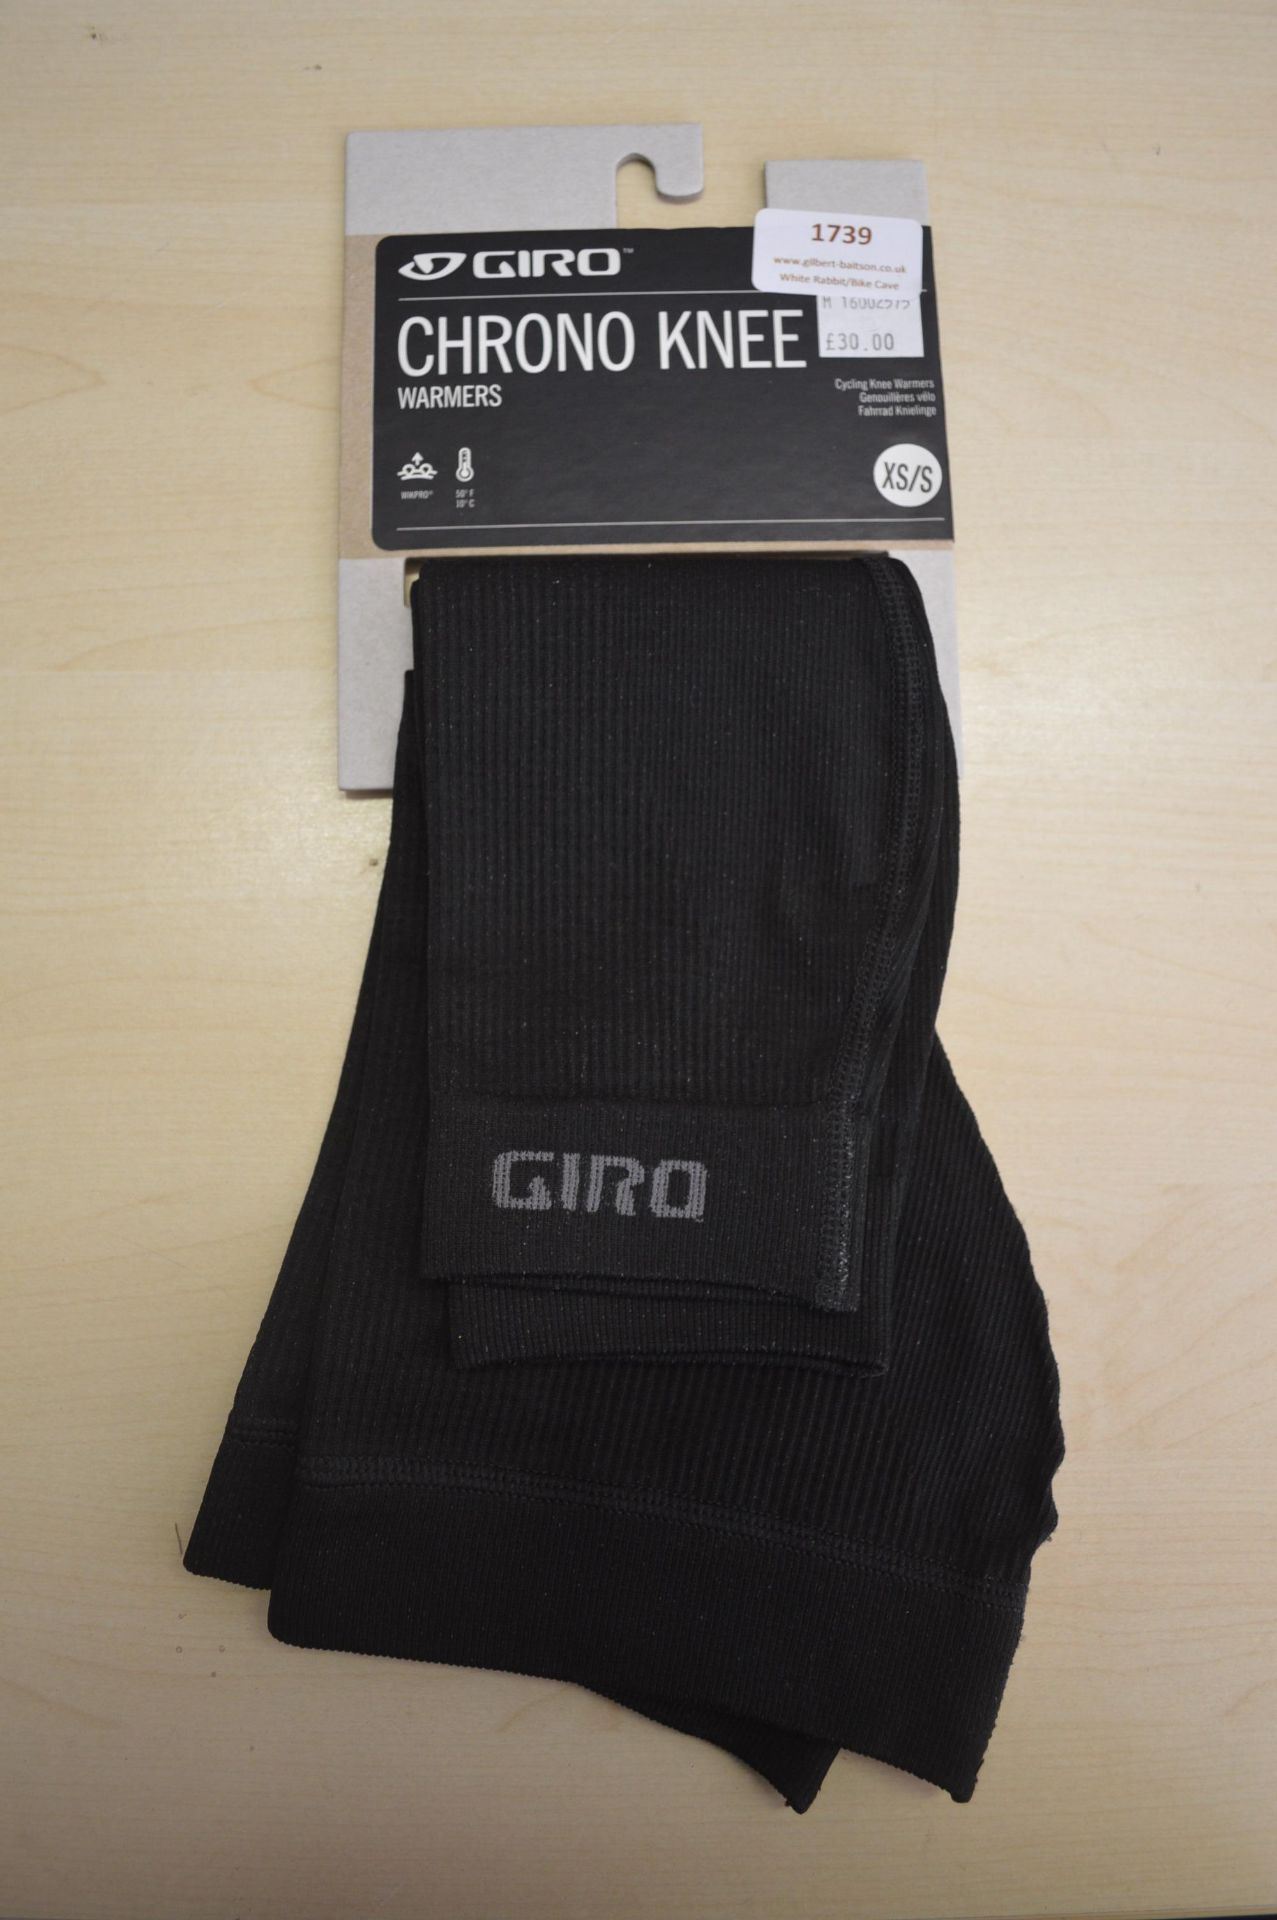 *Giro Chrono Knee Warmers Size: XS - S